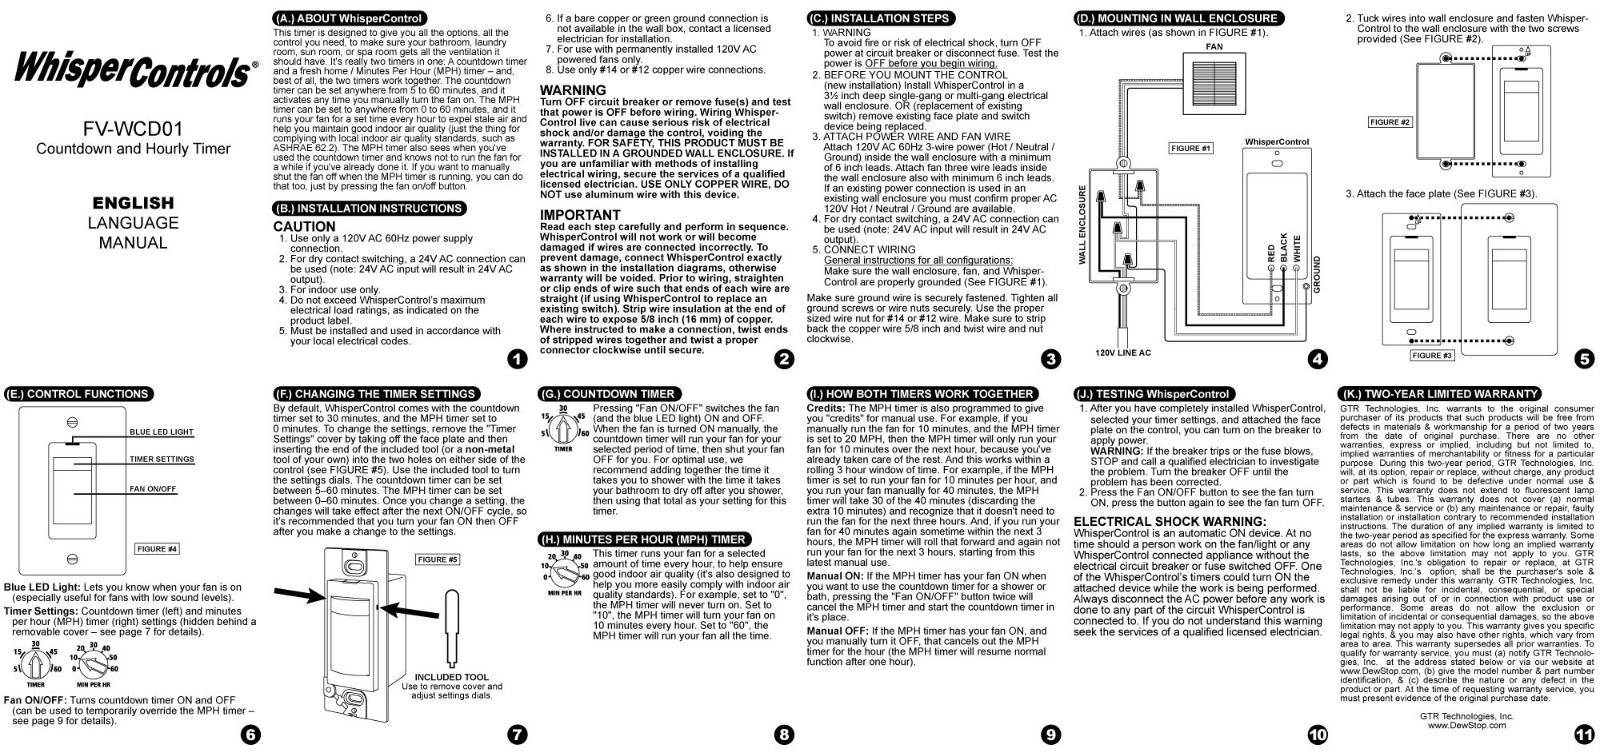 Panasonic FV-WCD01-W, FV-WCD01-A Instruction Manual